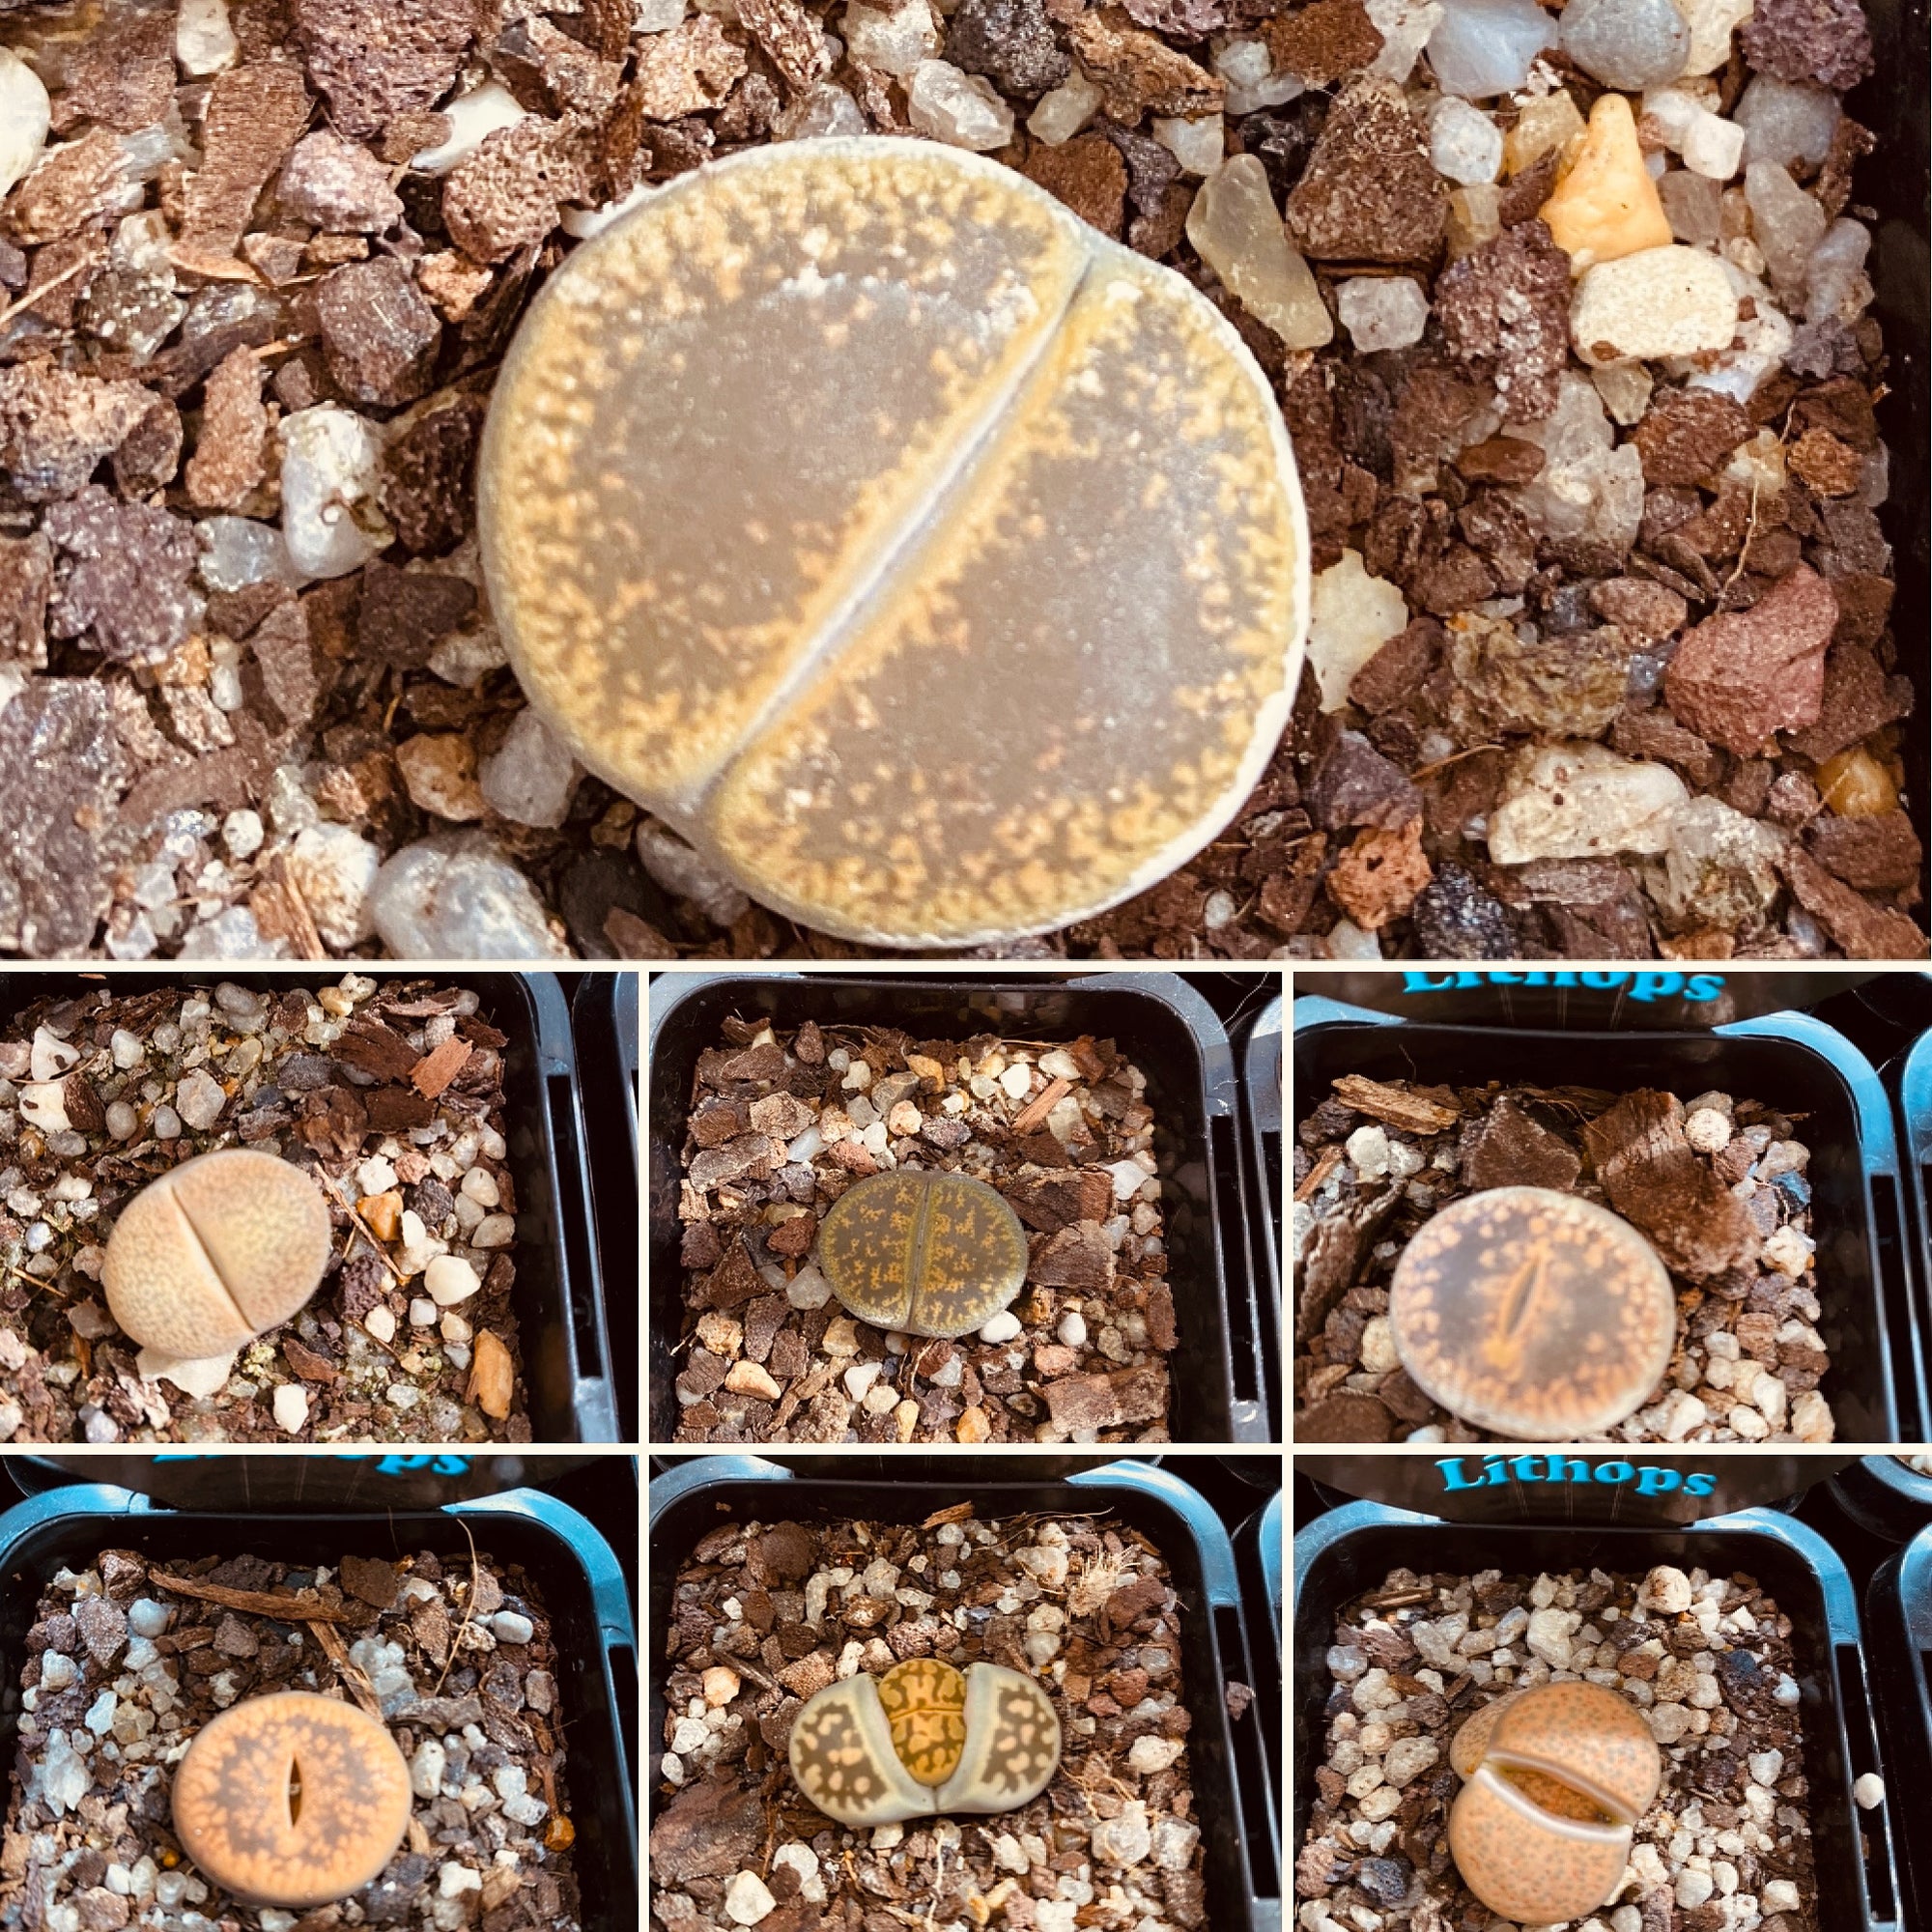 Lithops spp. - Living Stone Plant